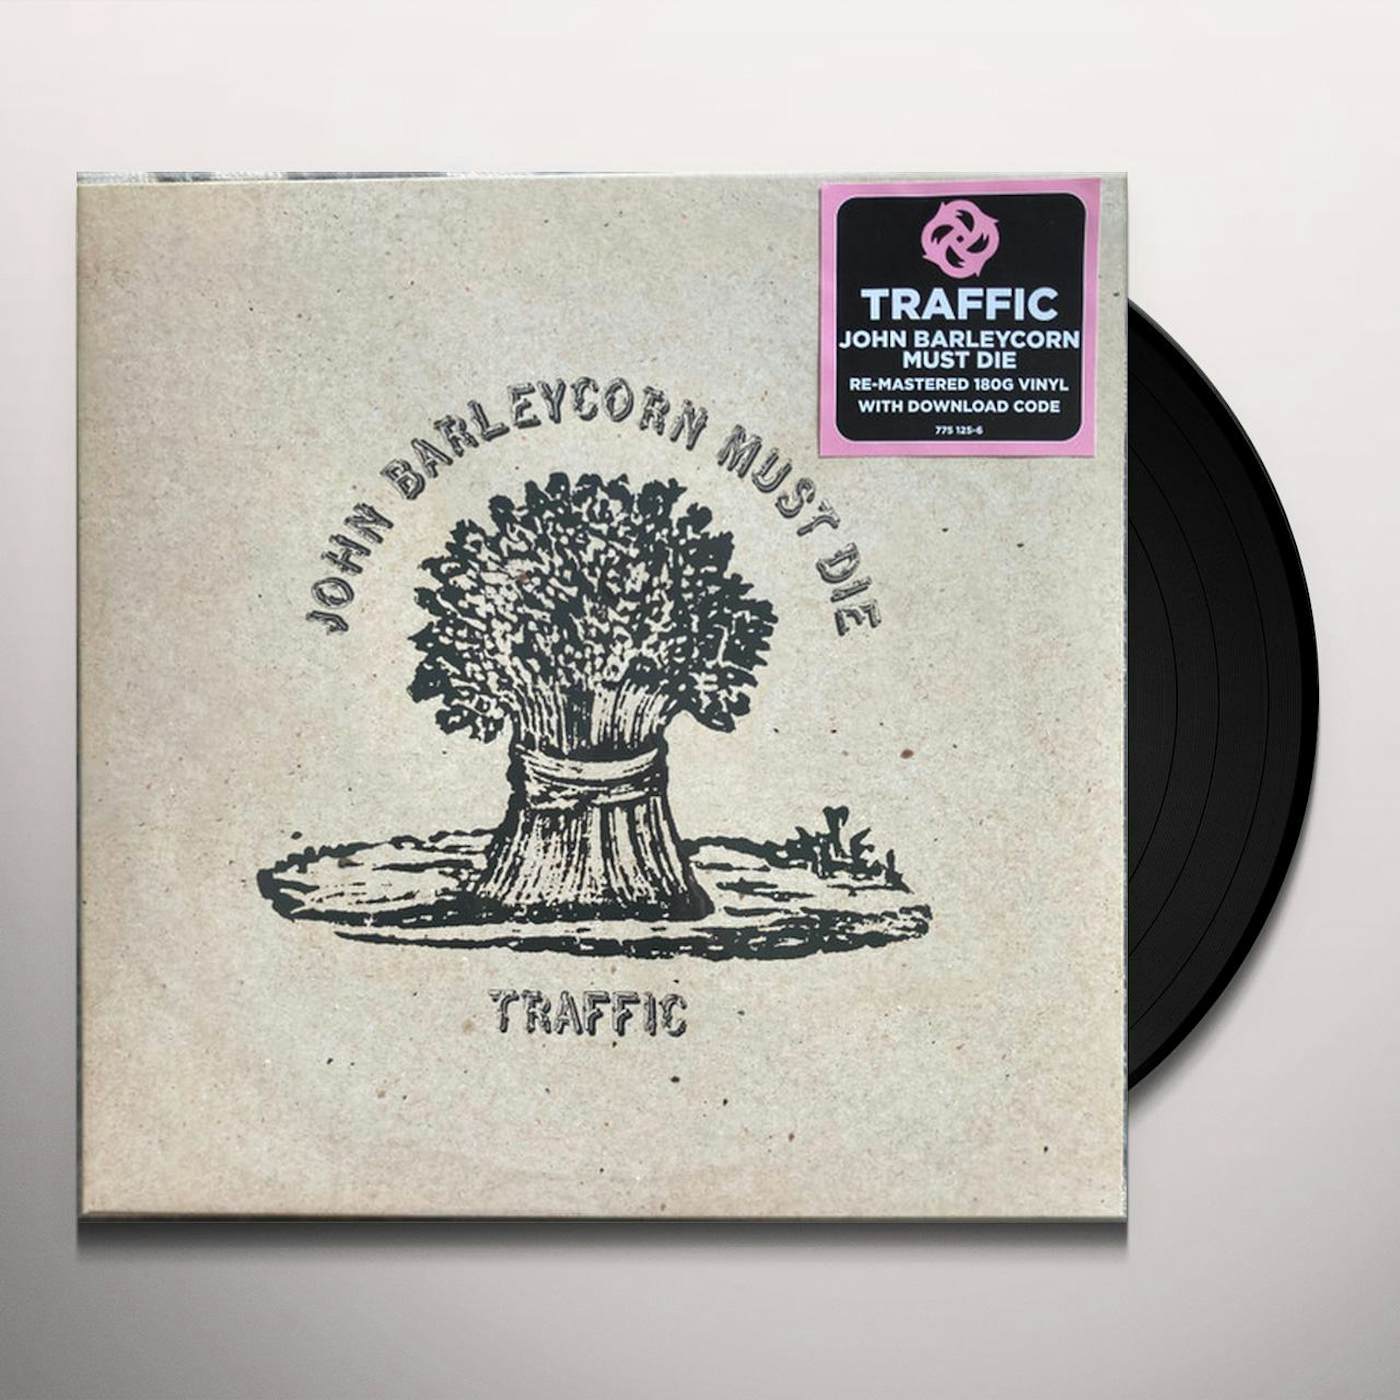 Traffic John Barleycorn Must Die Vinyl Record